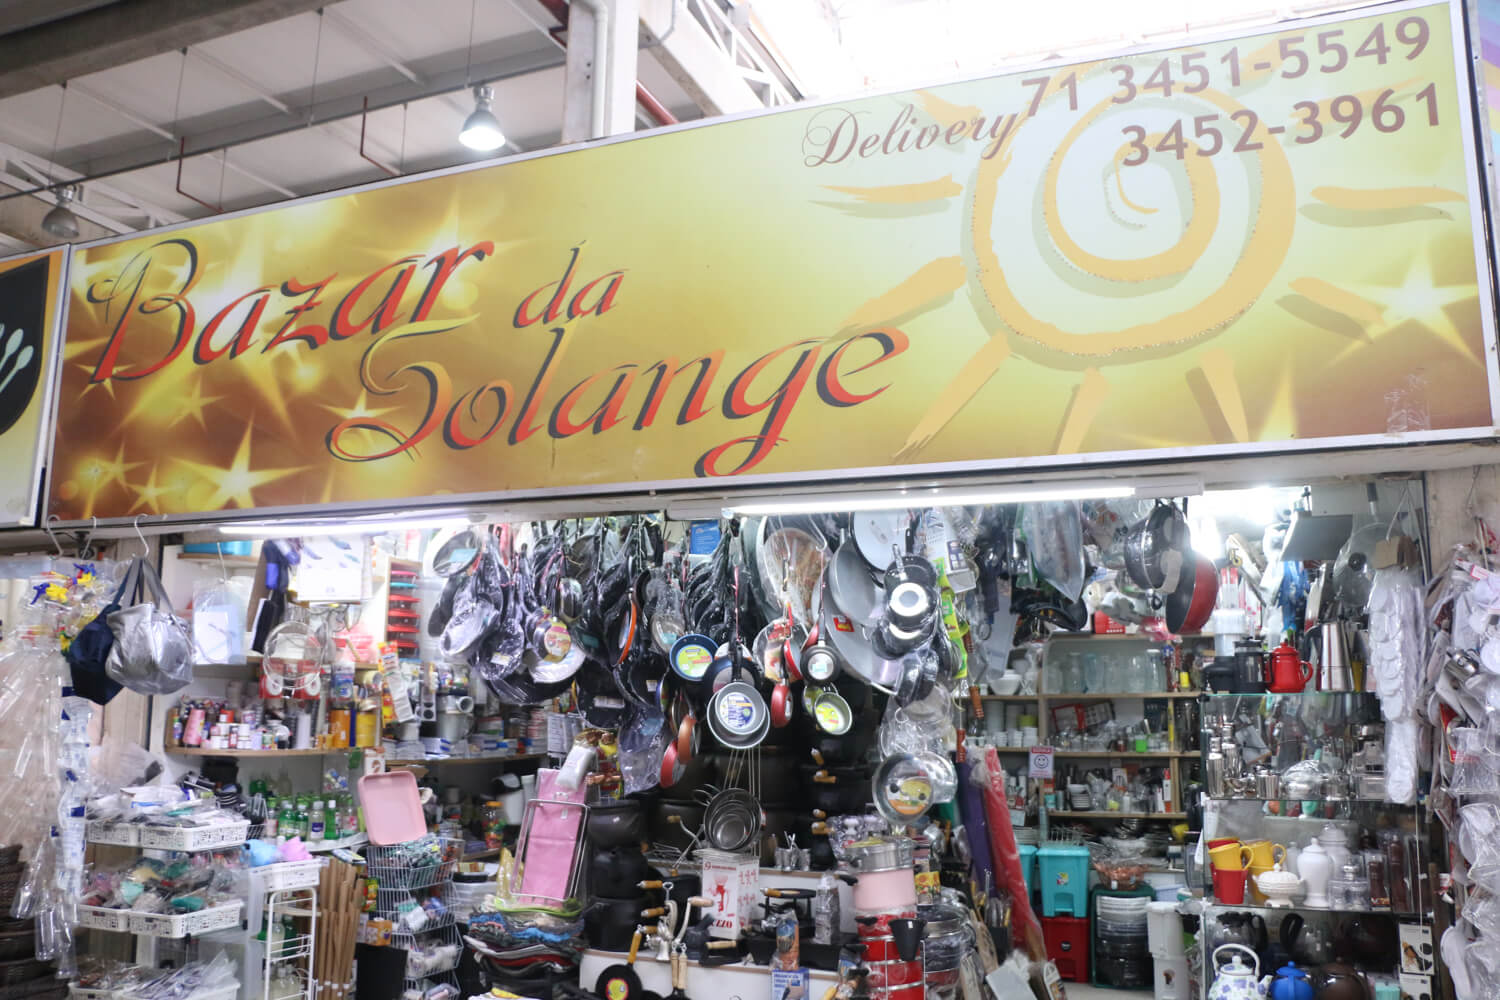 Bazar da Solange